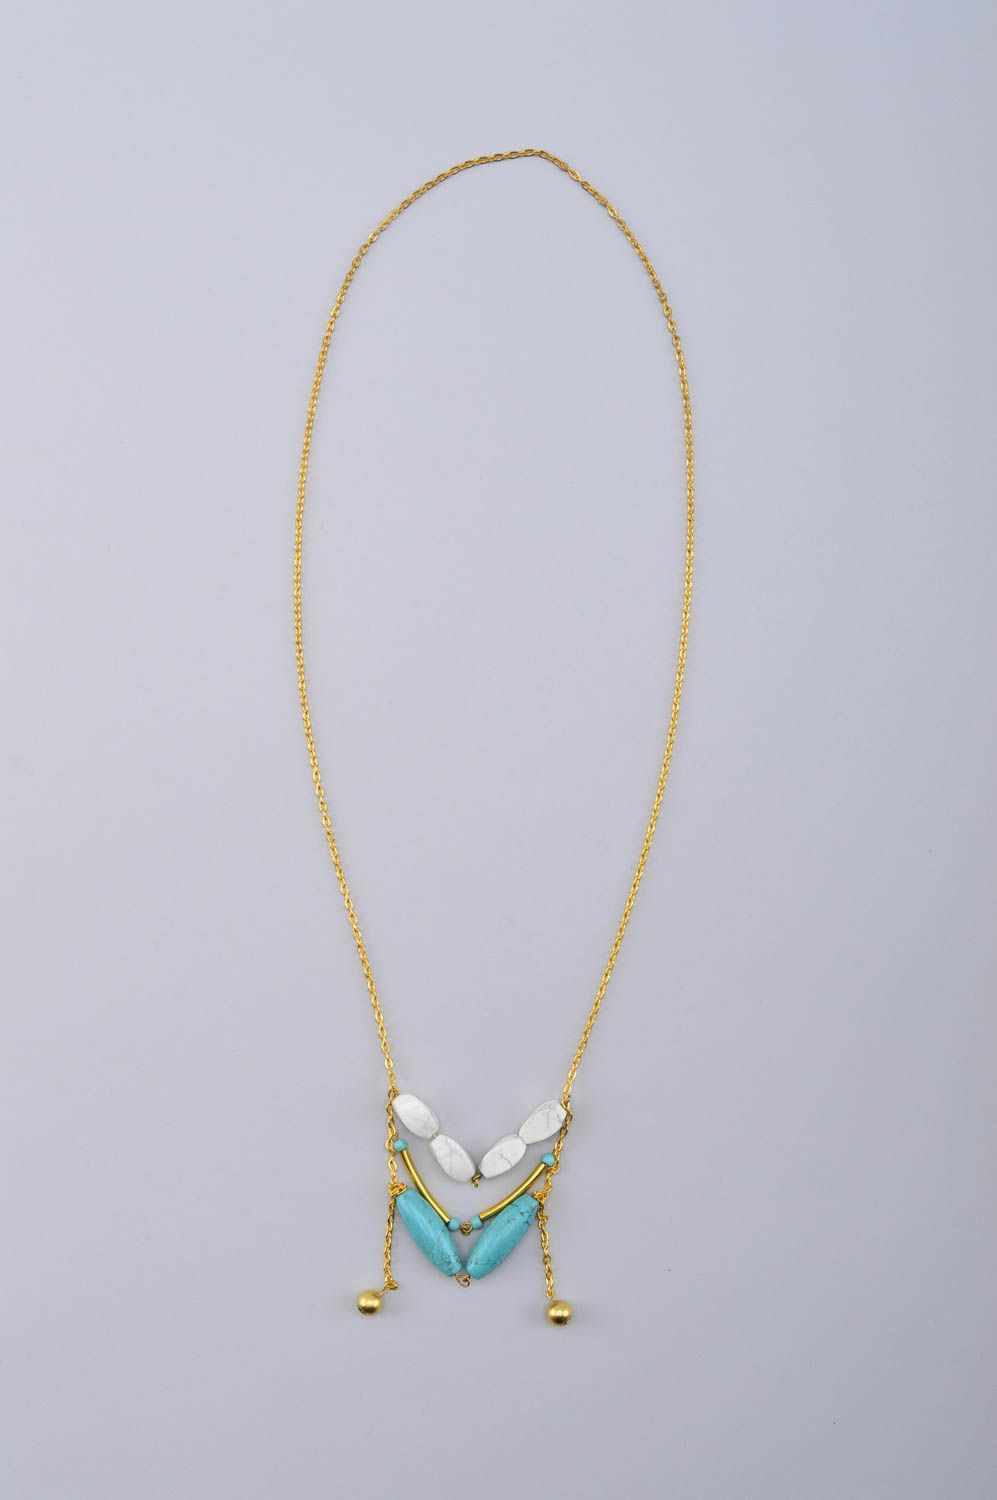 Handmade necklace unusual necklace gift ideas designer accessory elite jewelry photo 2